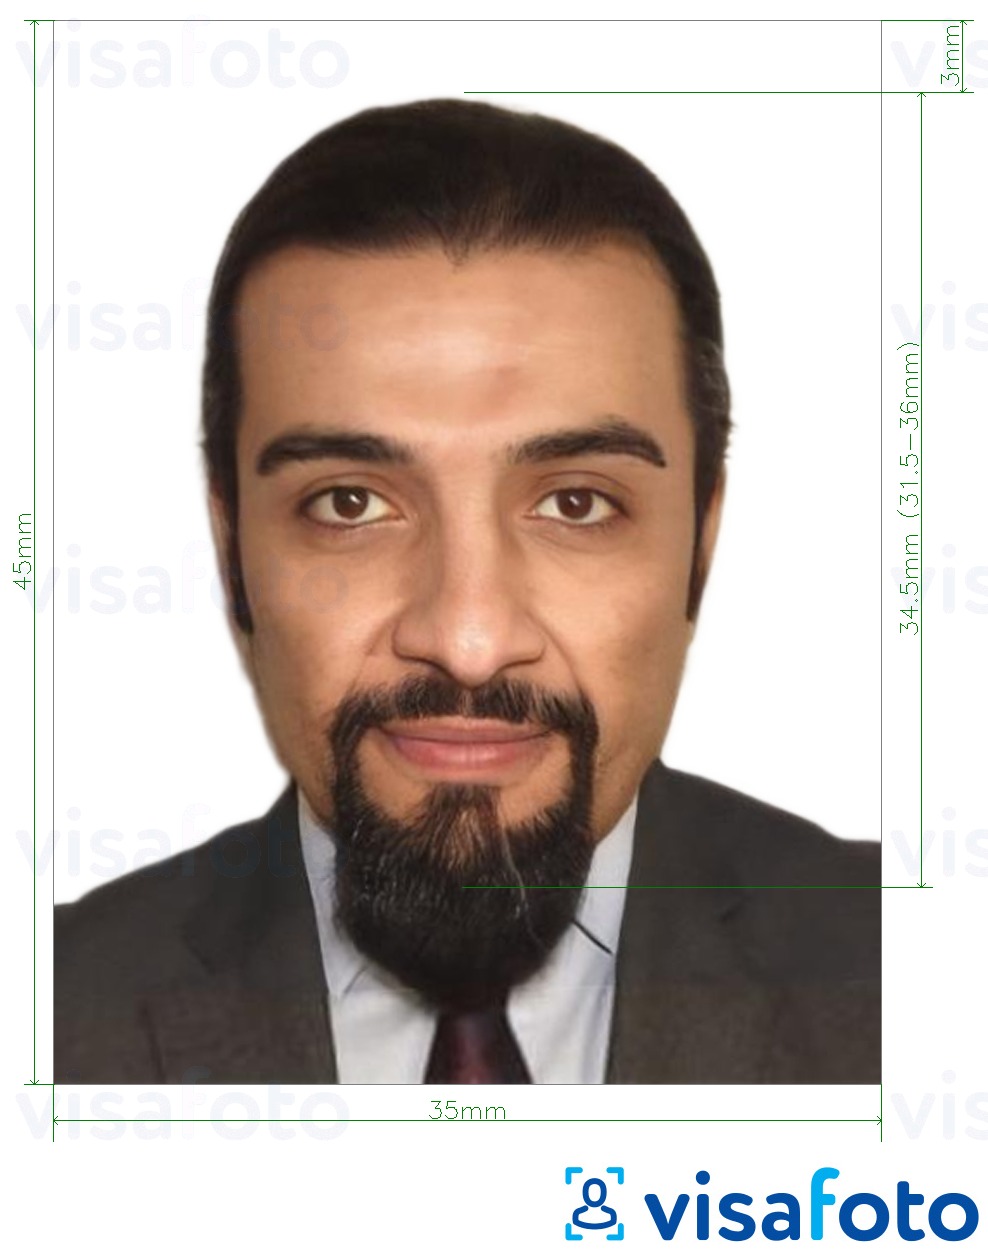 Example of the Ethiopia visa photo